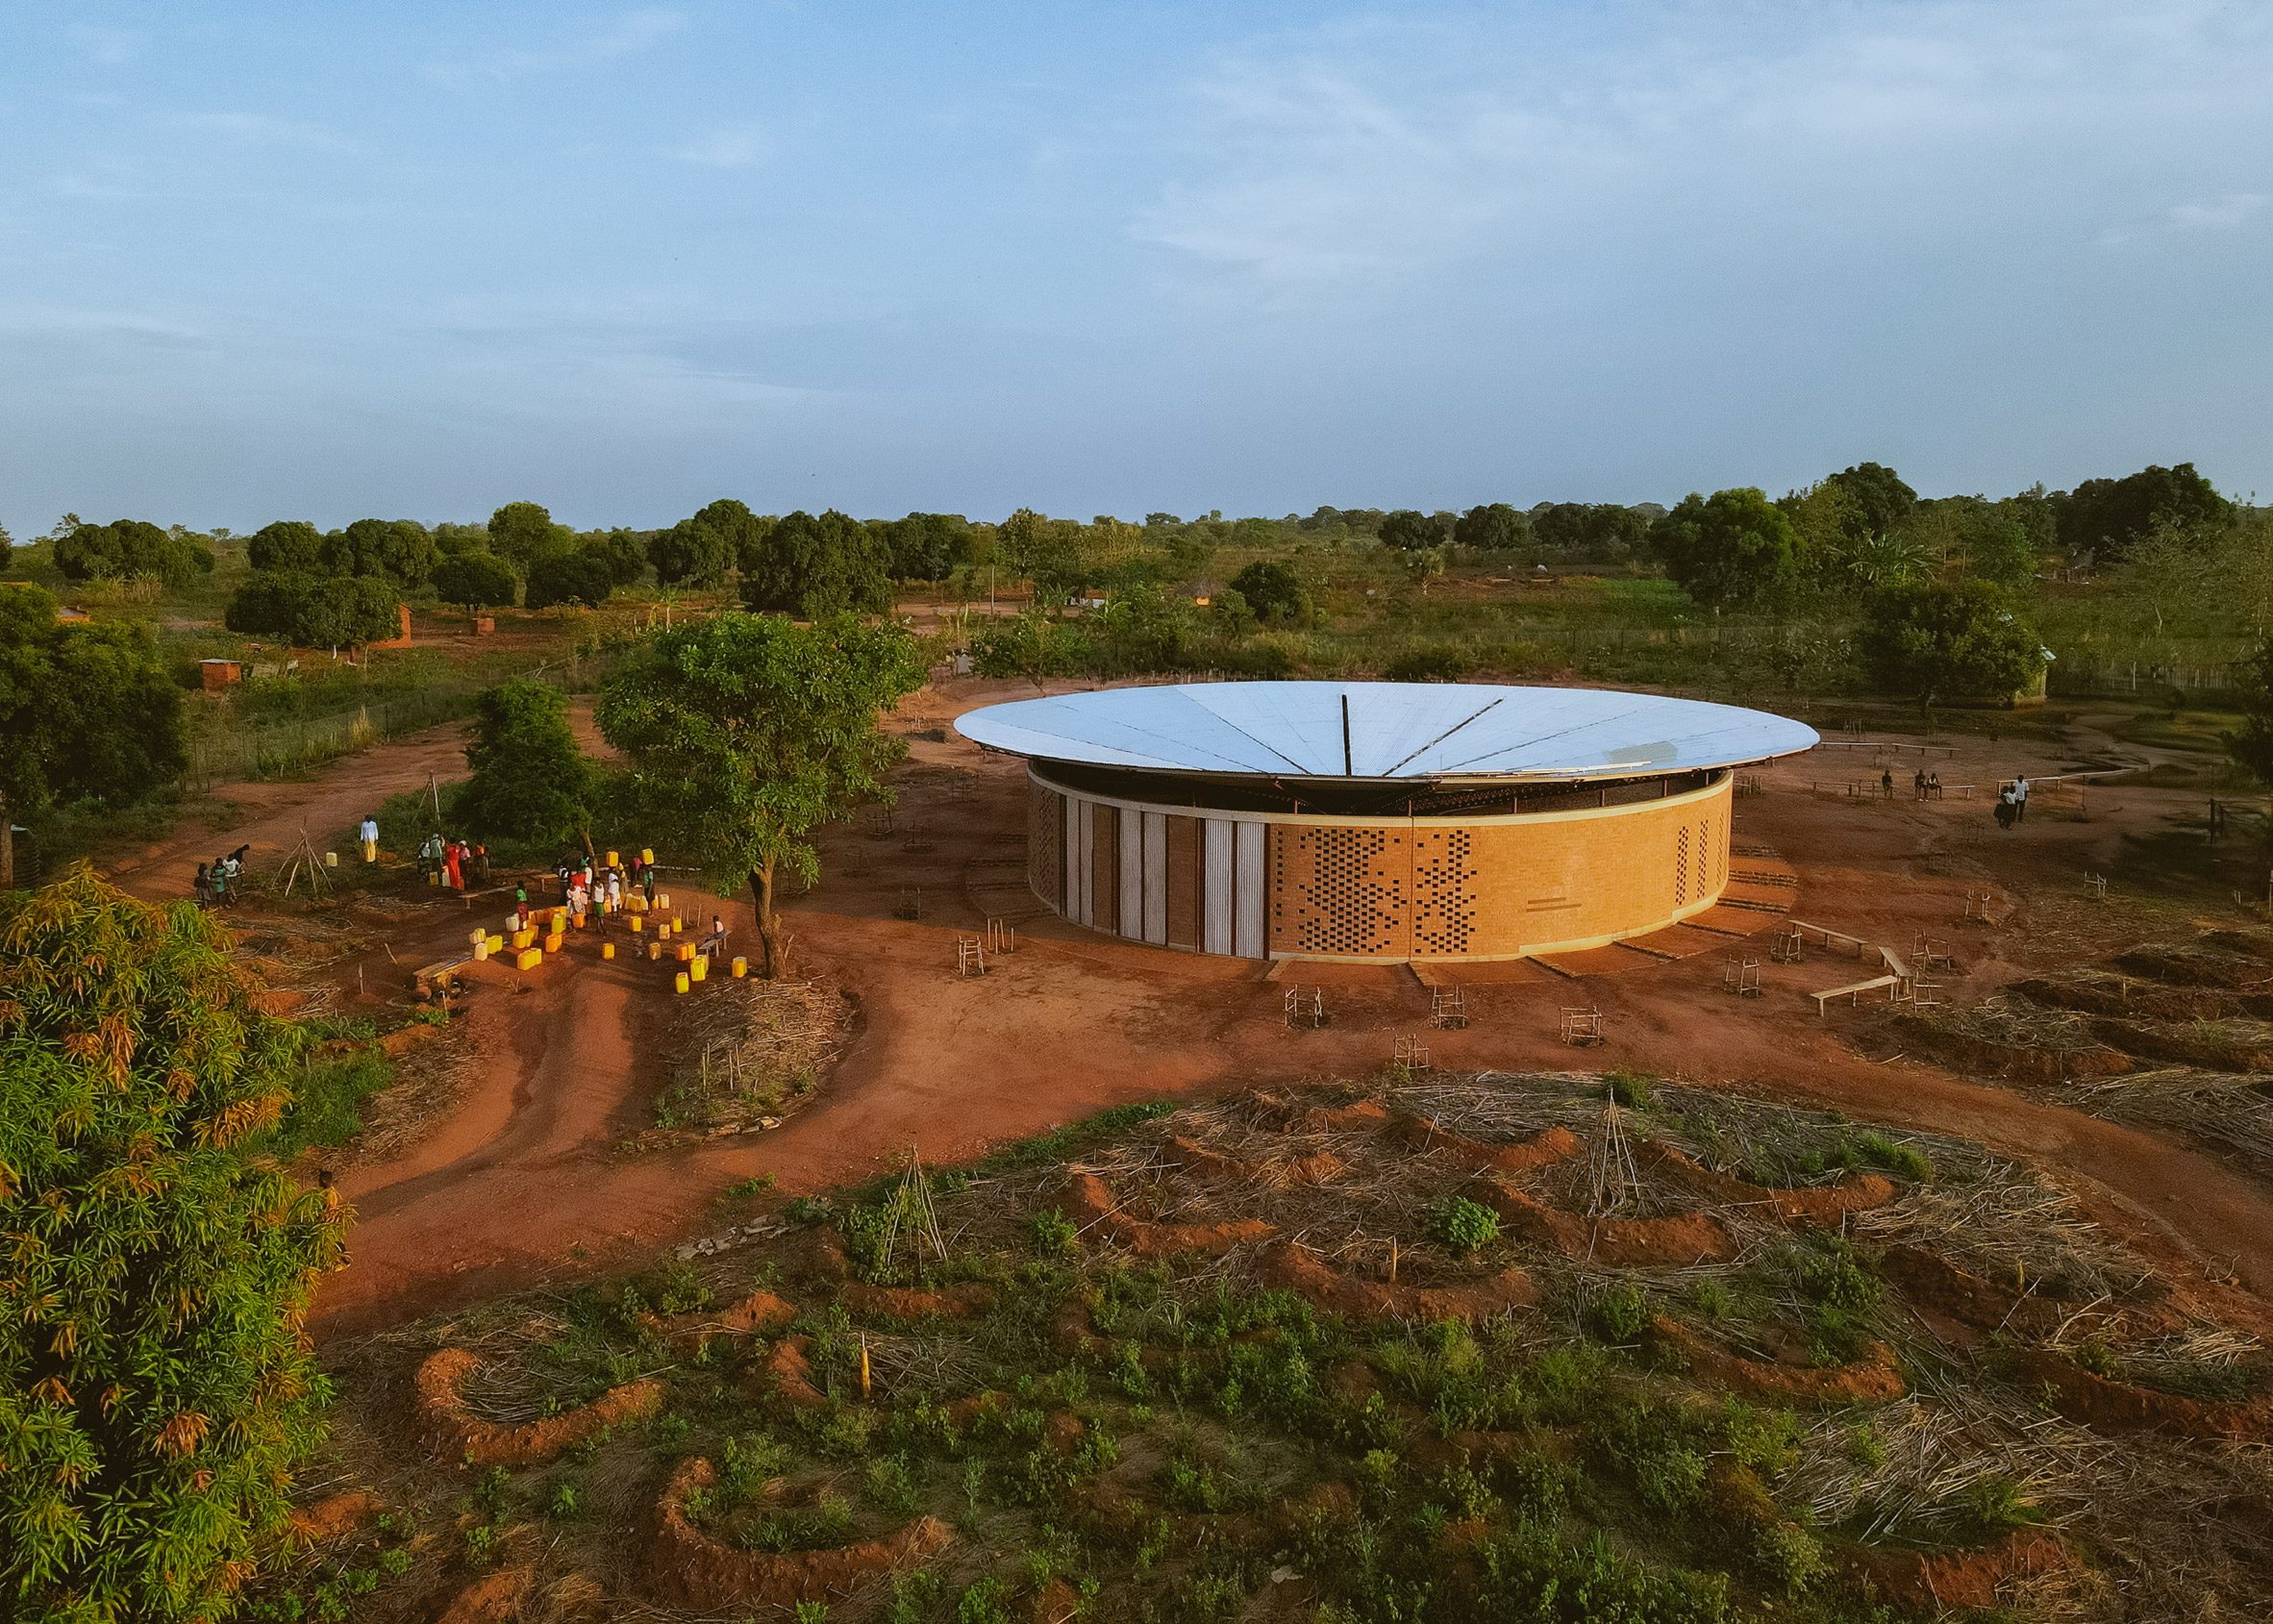 Amphitheatre-like building in Uganda 